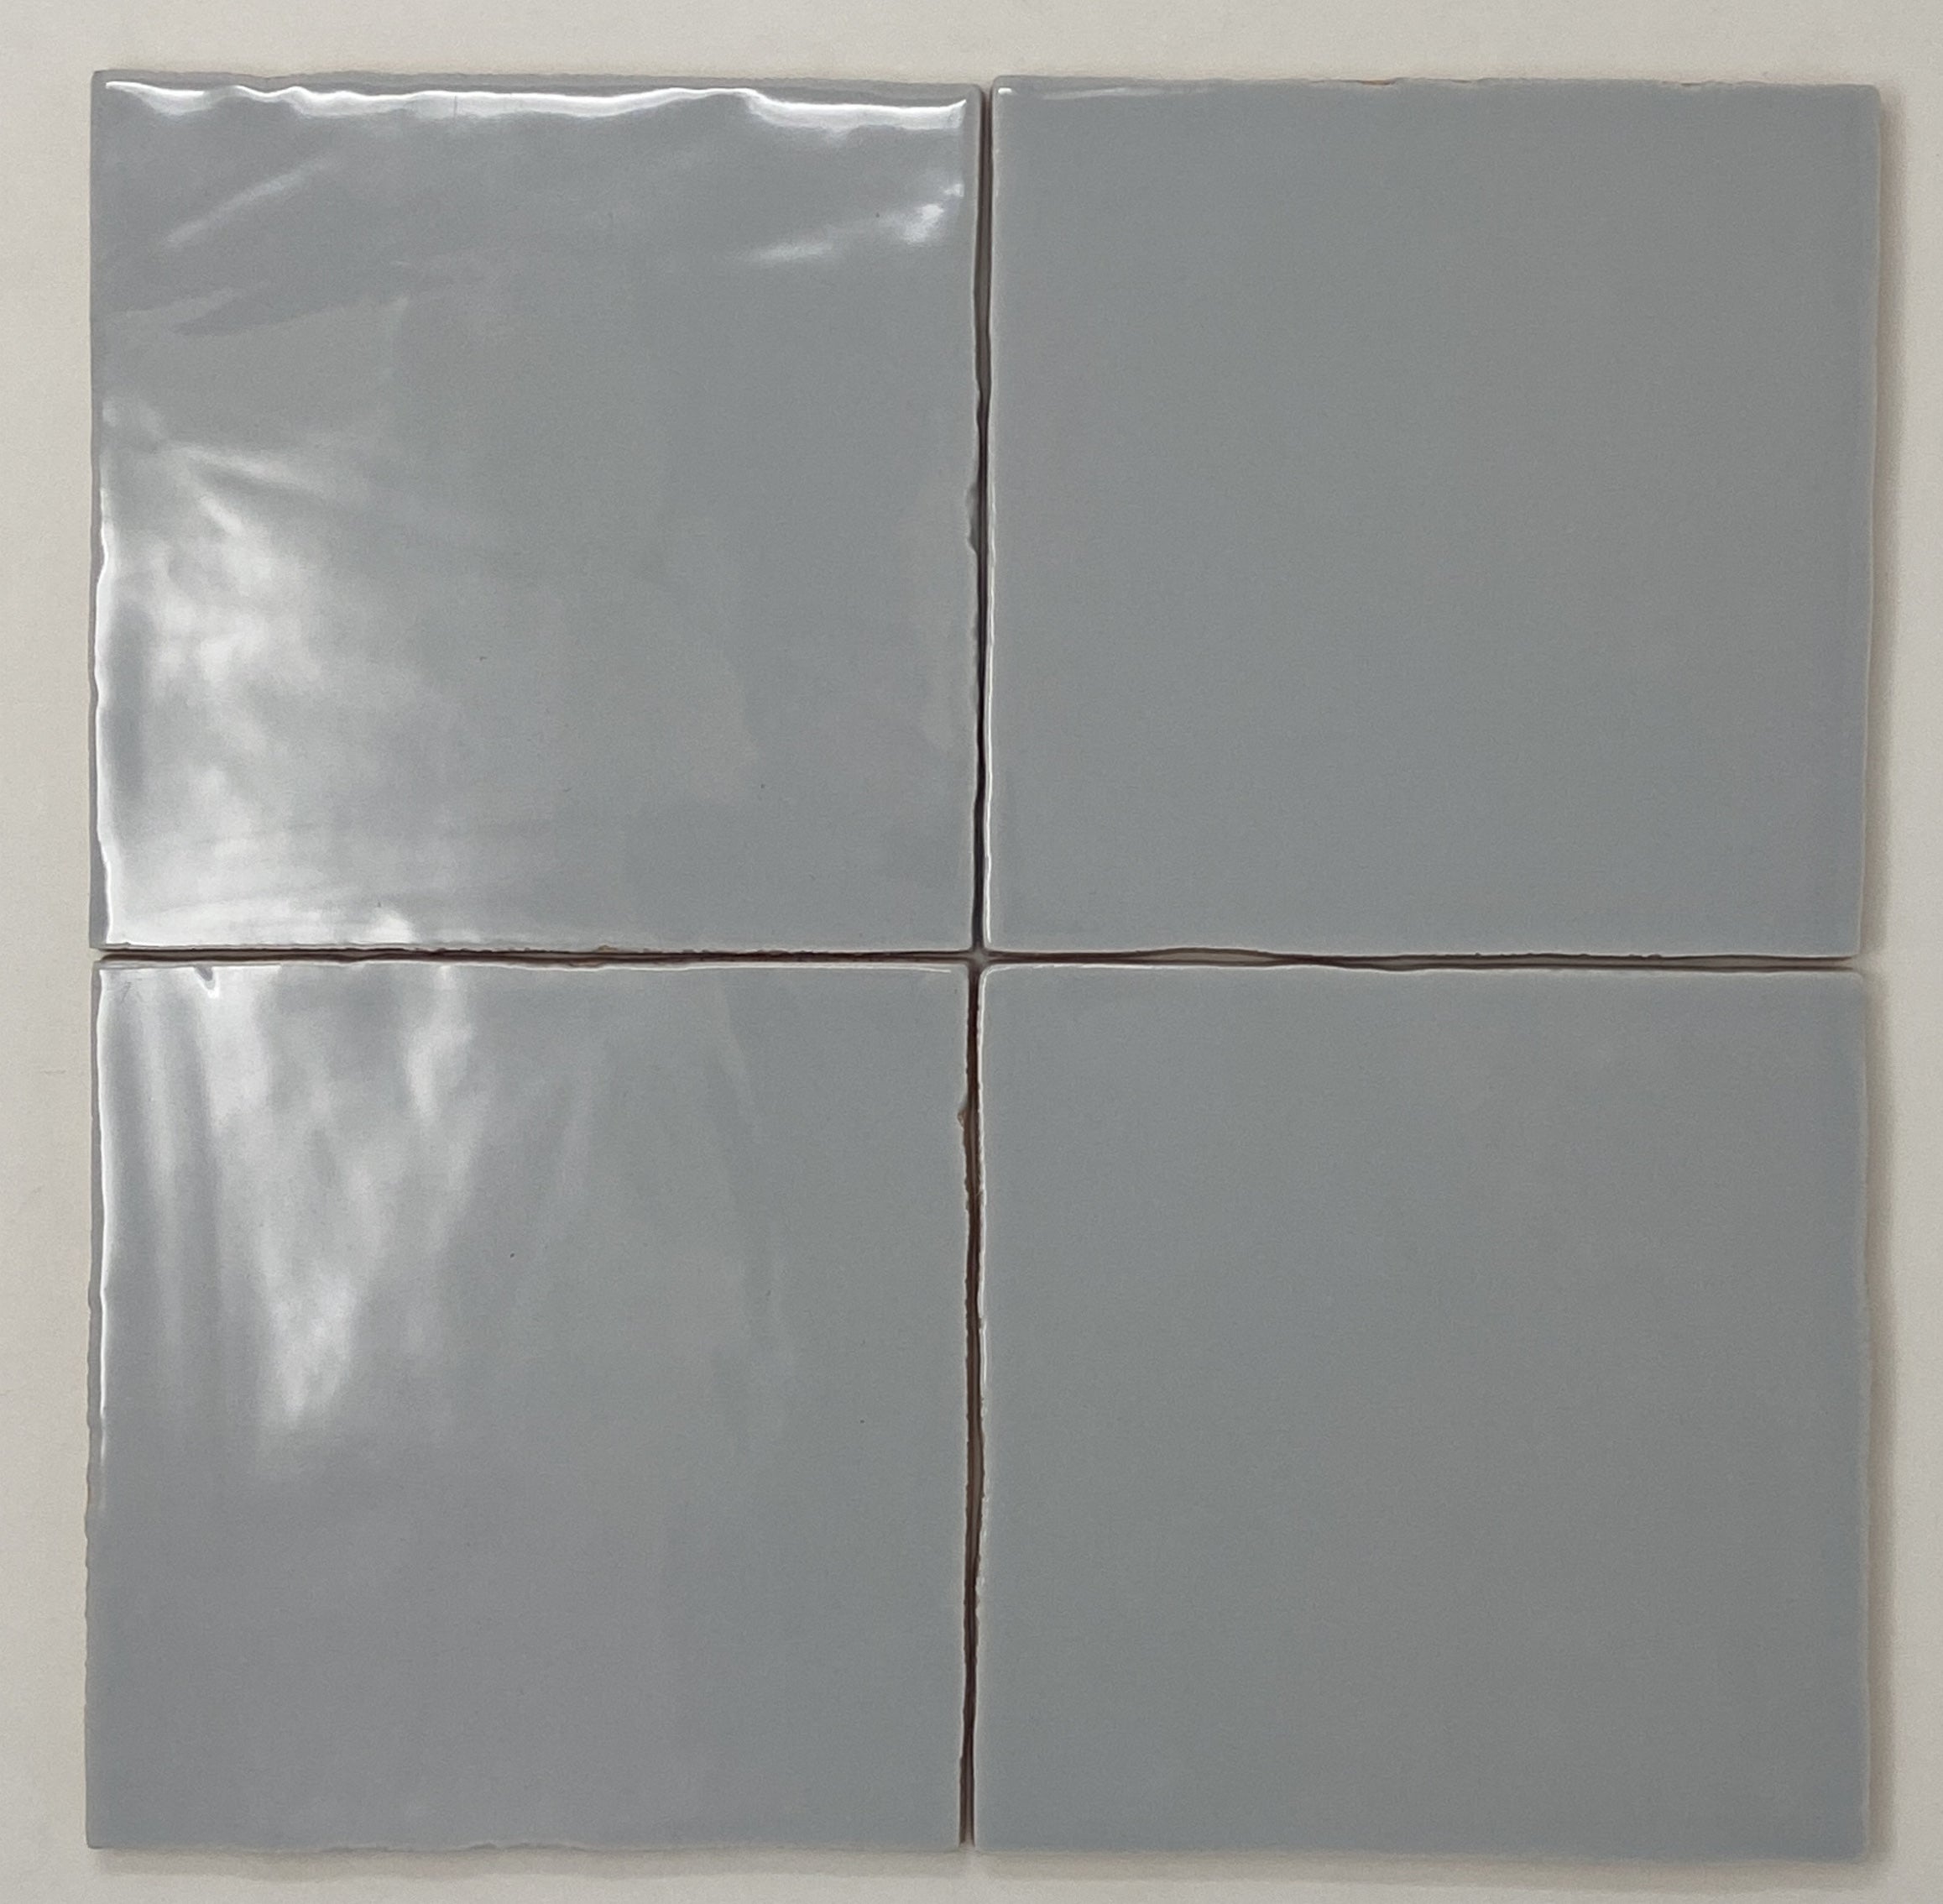 6x6 Gray Handmade Look Subway Ceramic Tile Glossy for Bathroom Shower, Kitchen Backsplashes, Fireplace